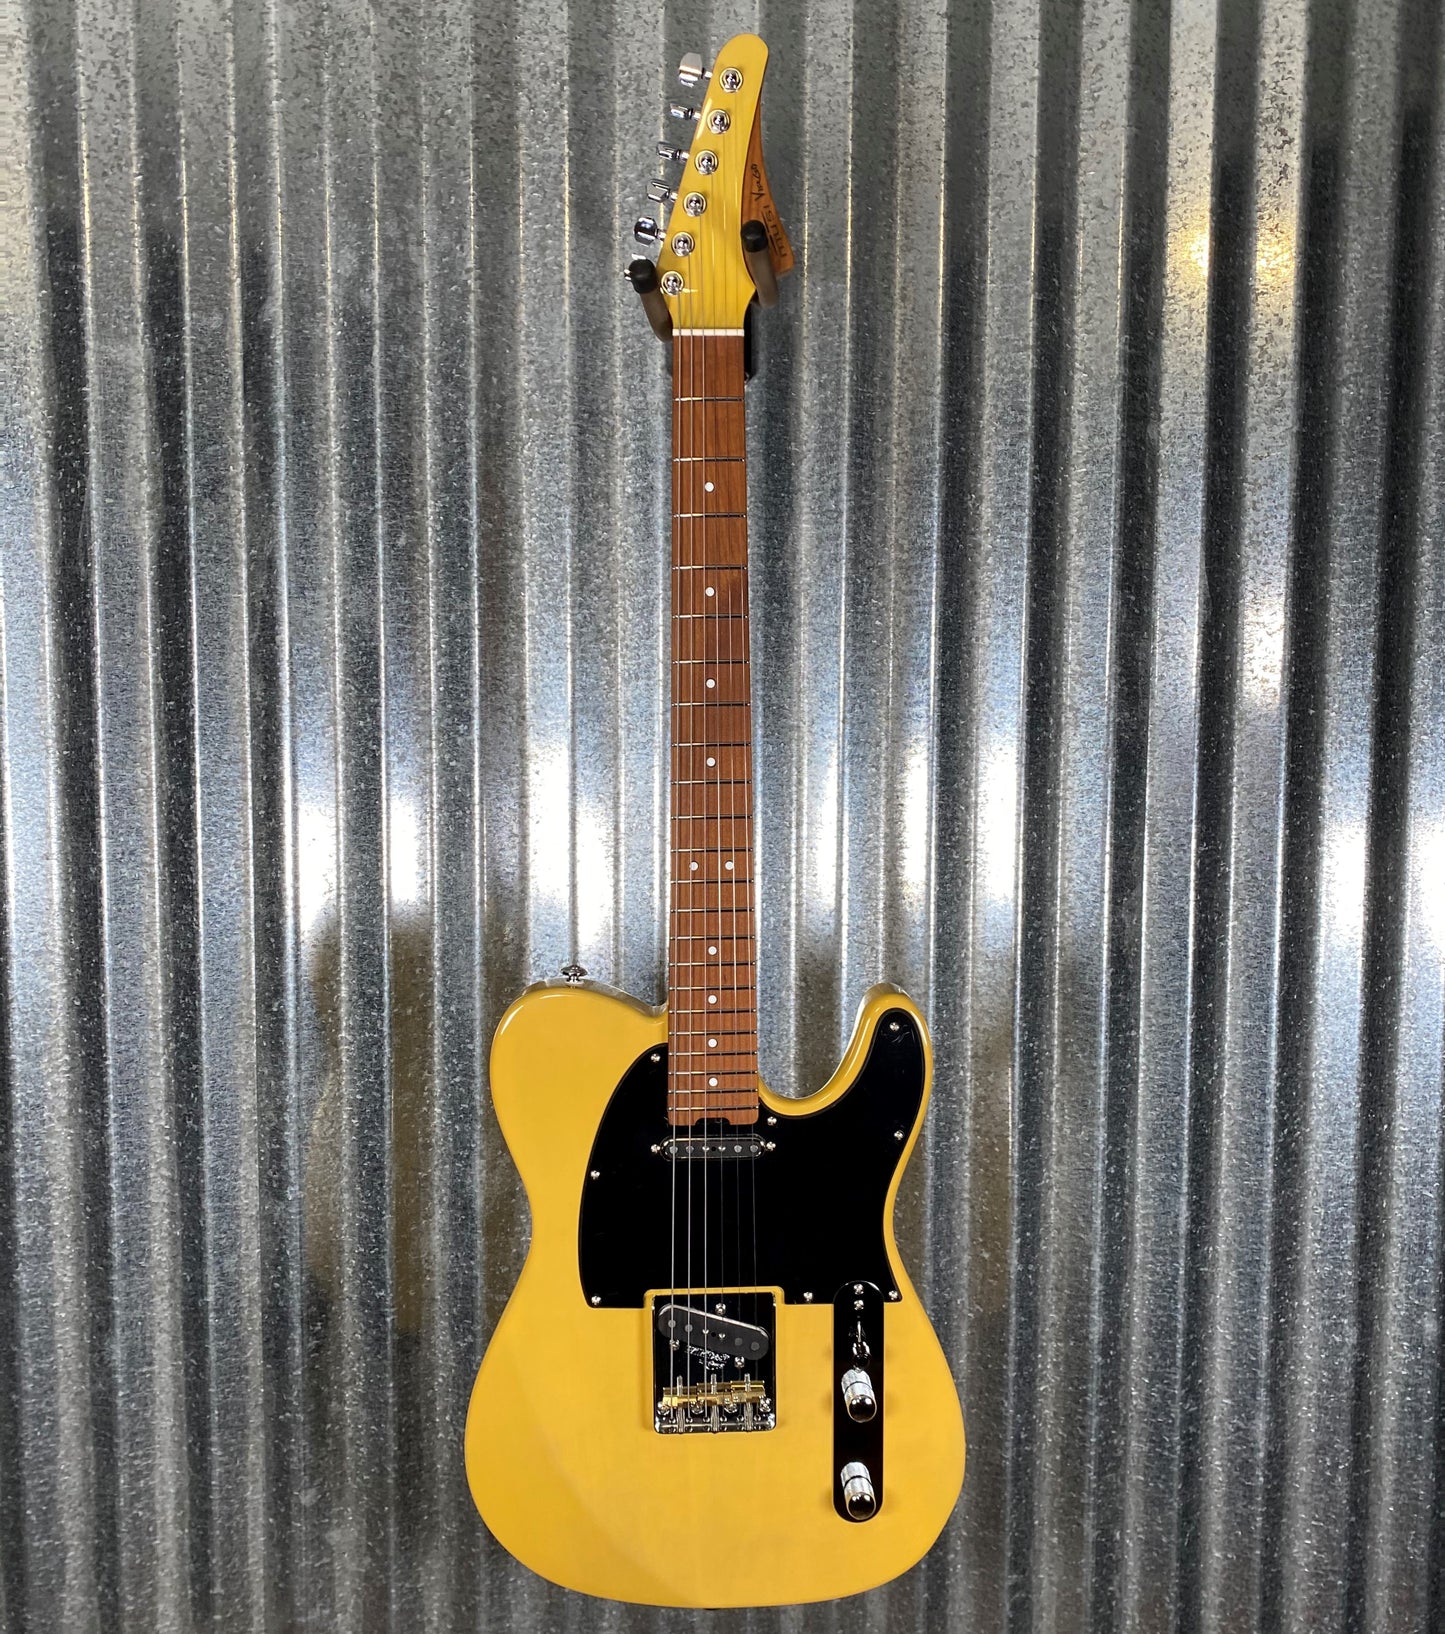 Musi Virgo Classic Telecaster Empire Yellow Guitar #0289 Used